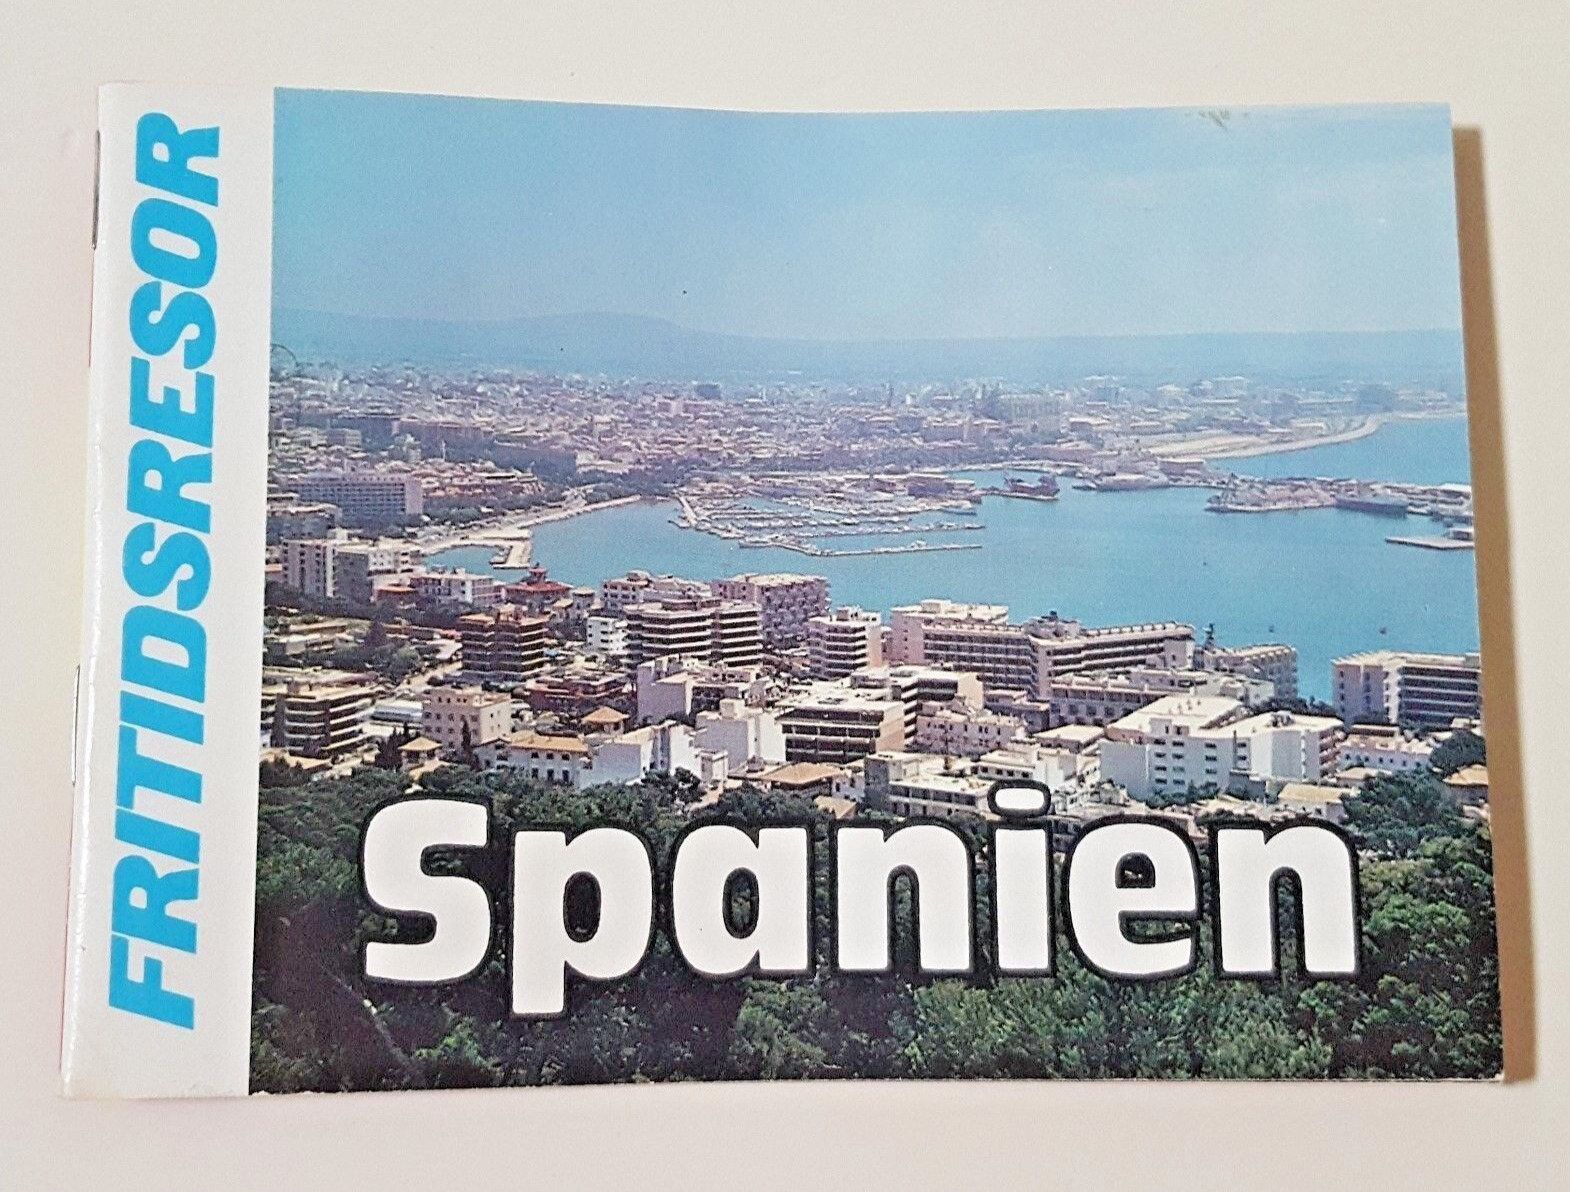 1979 Vintage Swedish Tourist Booklet for Visiting Spain